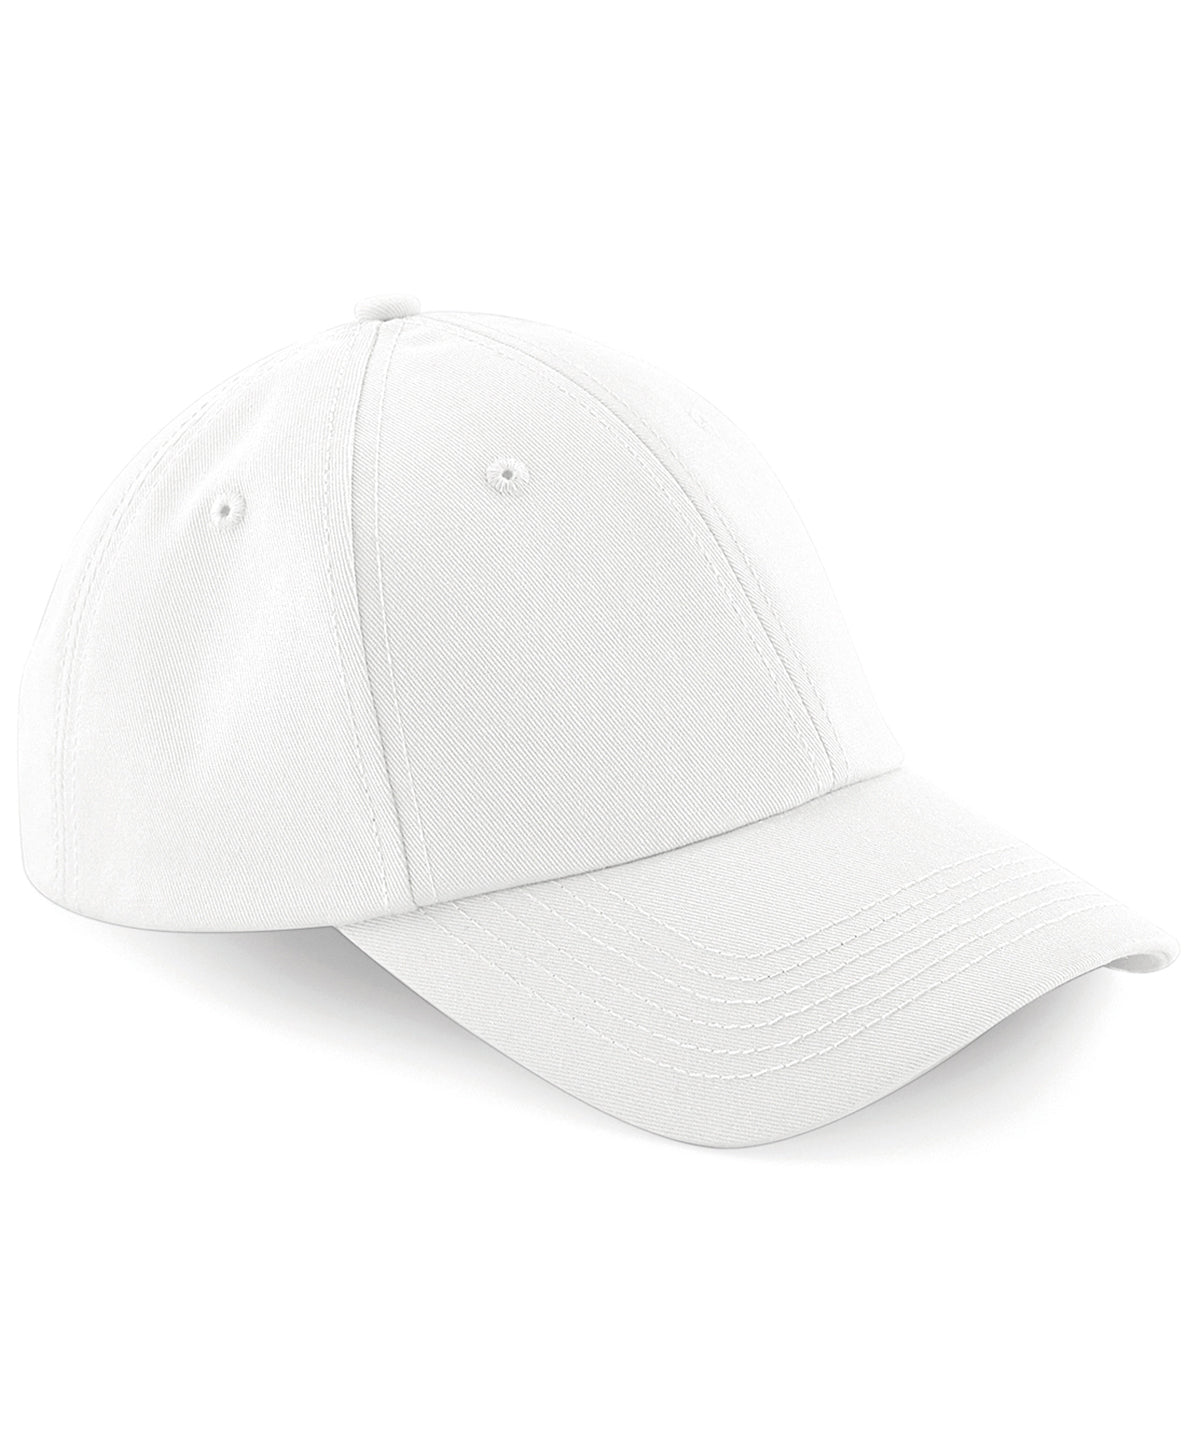 Personalised Caps - White Beechfield Authentic baseball cap